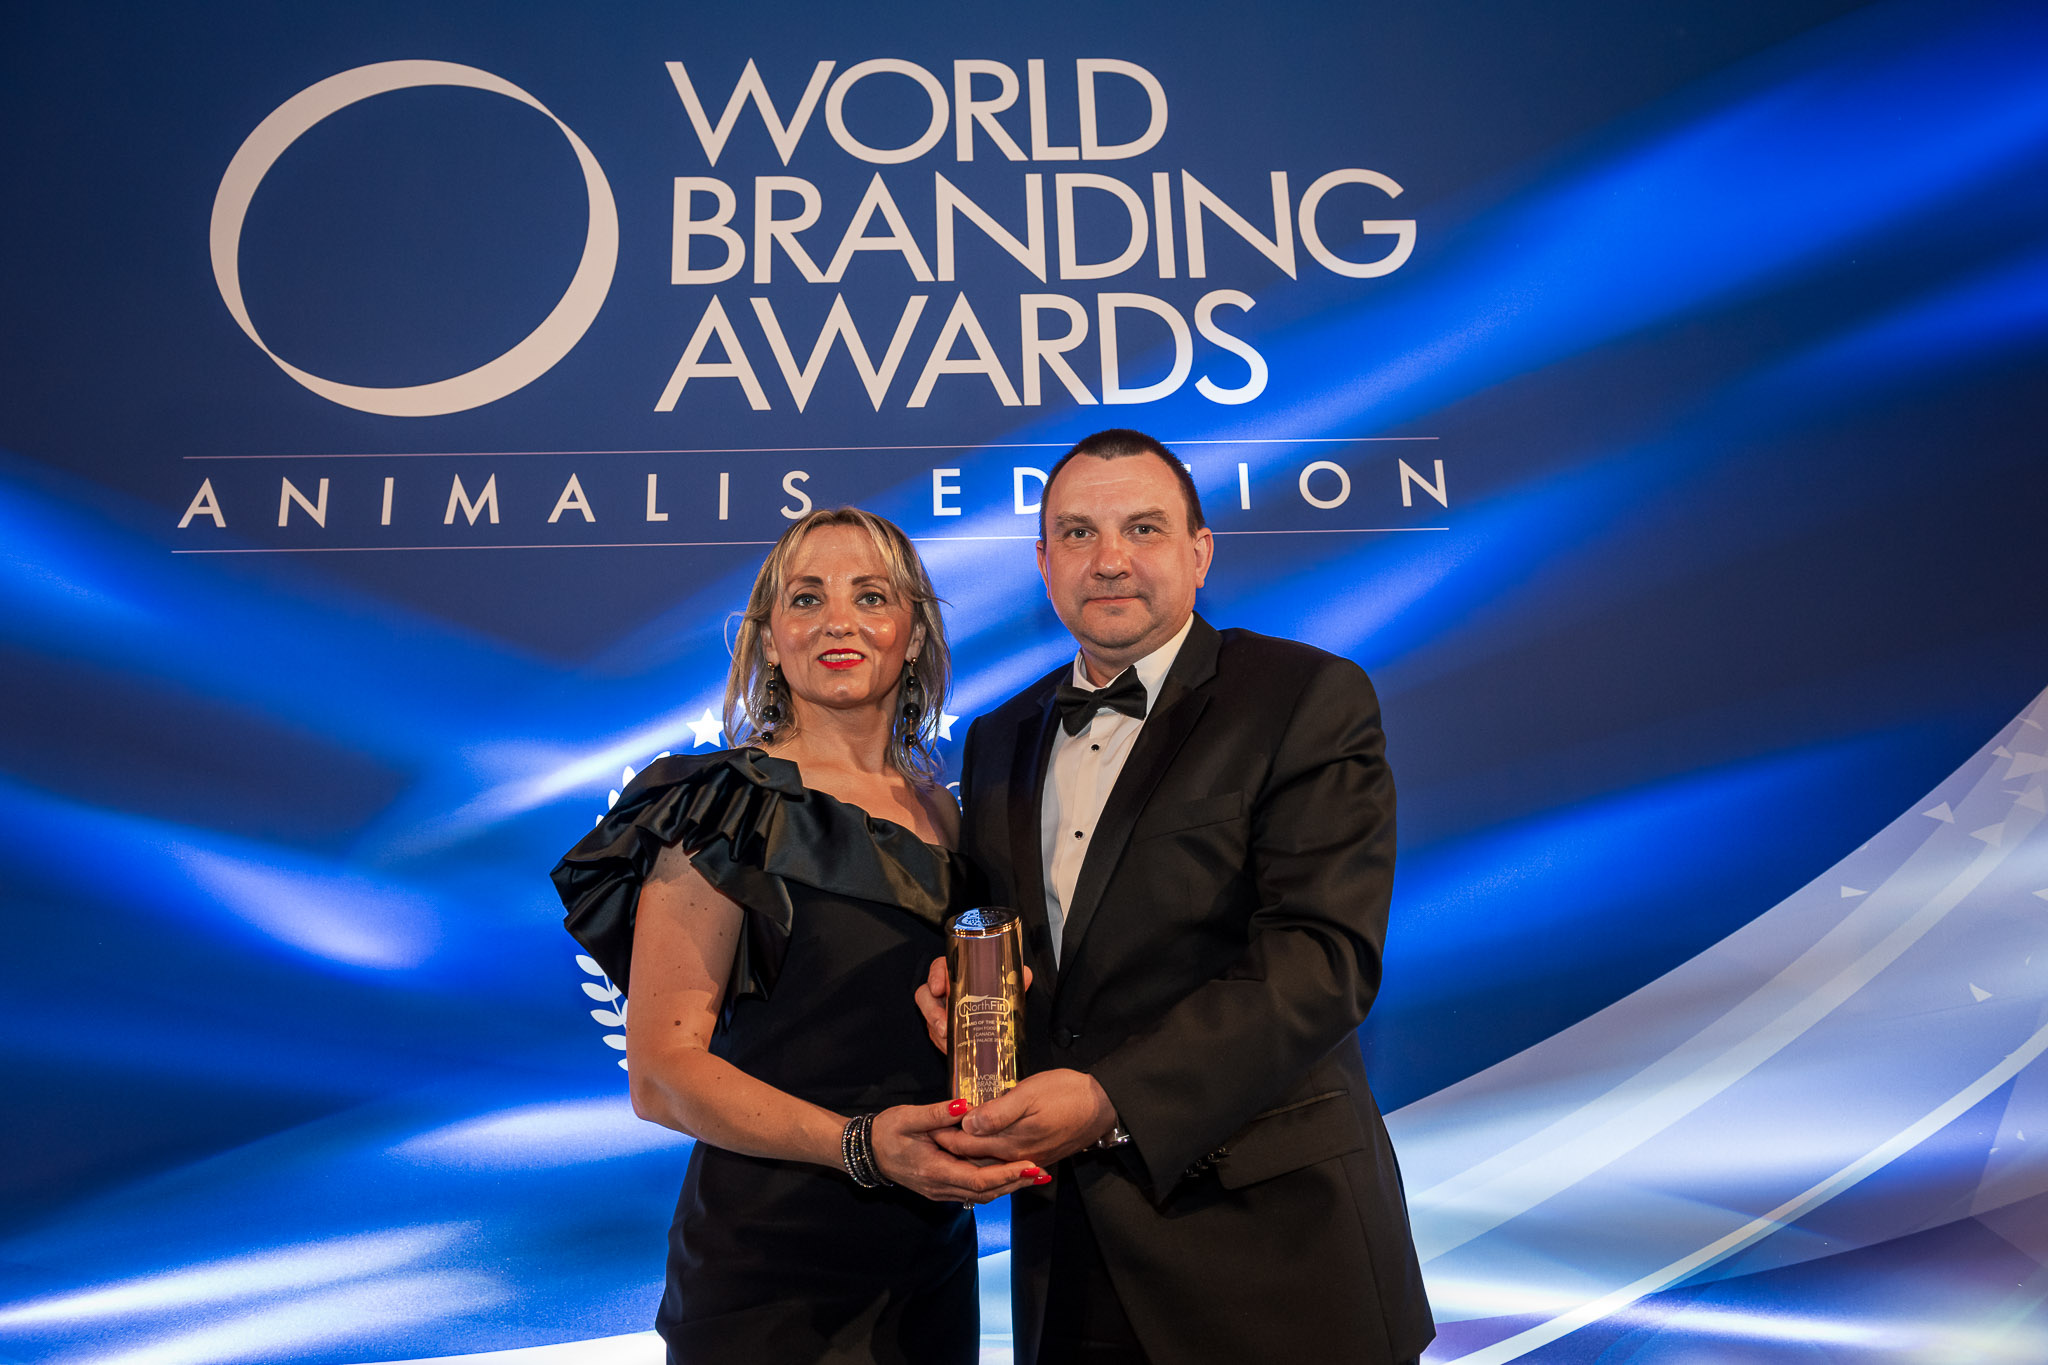 20190703_224633_world_branding_awards_animalis_8001